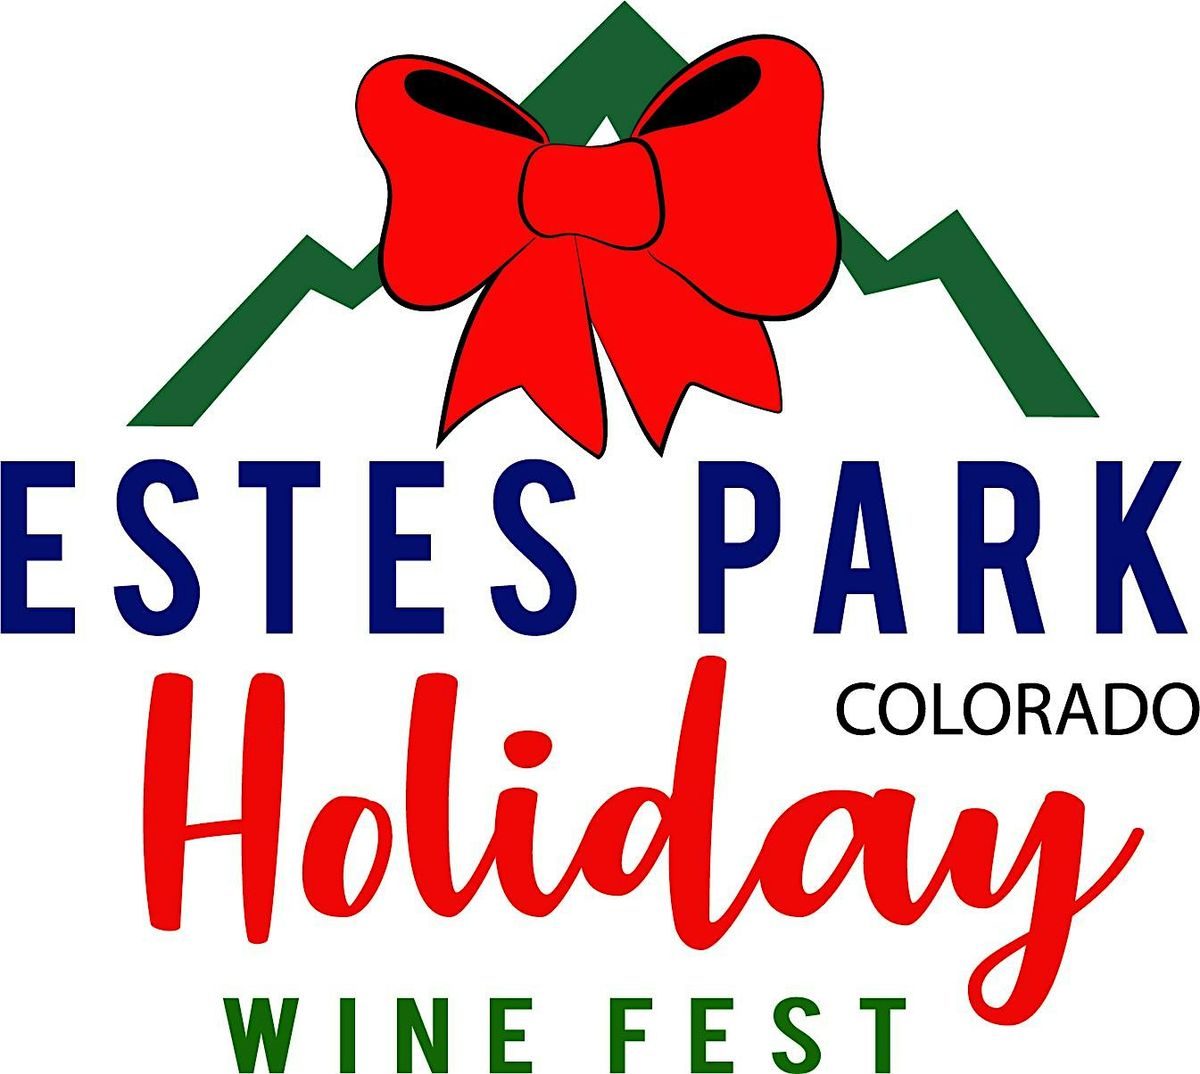 5th Annual Estes Park Holiday Wine Festival